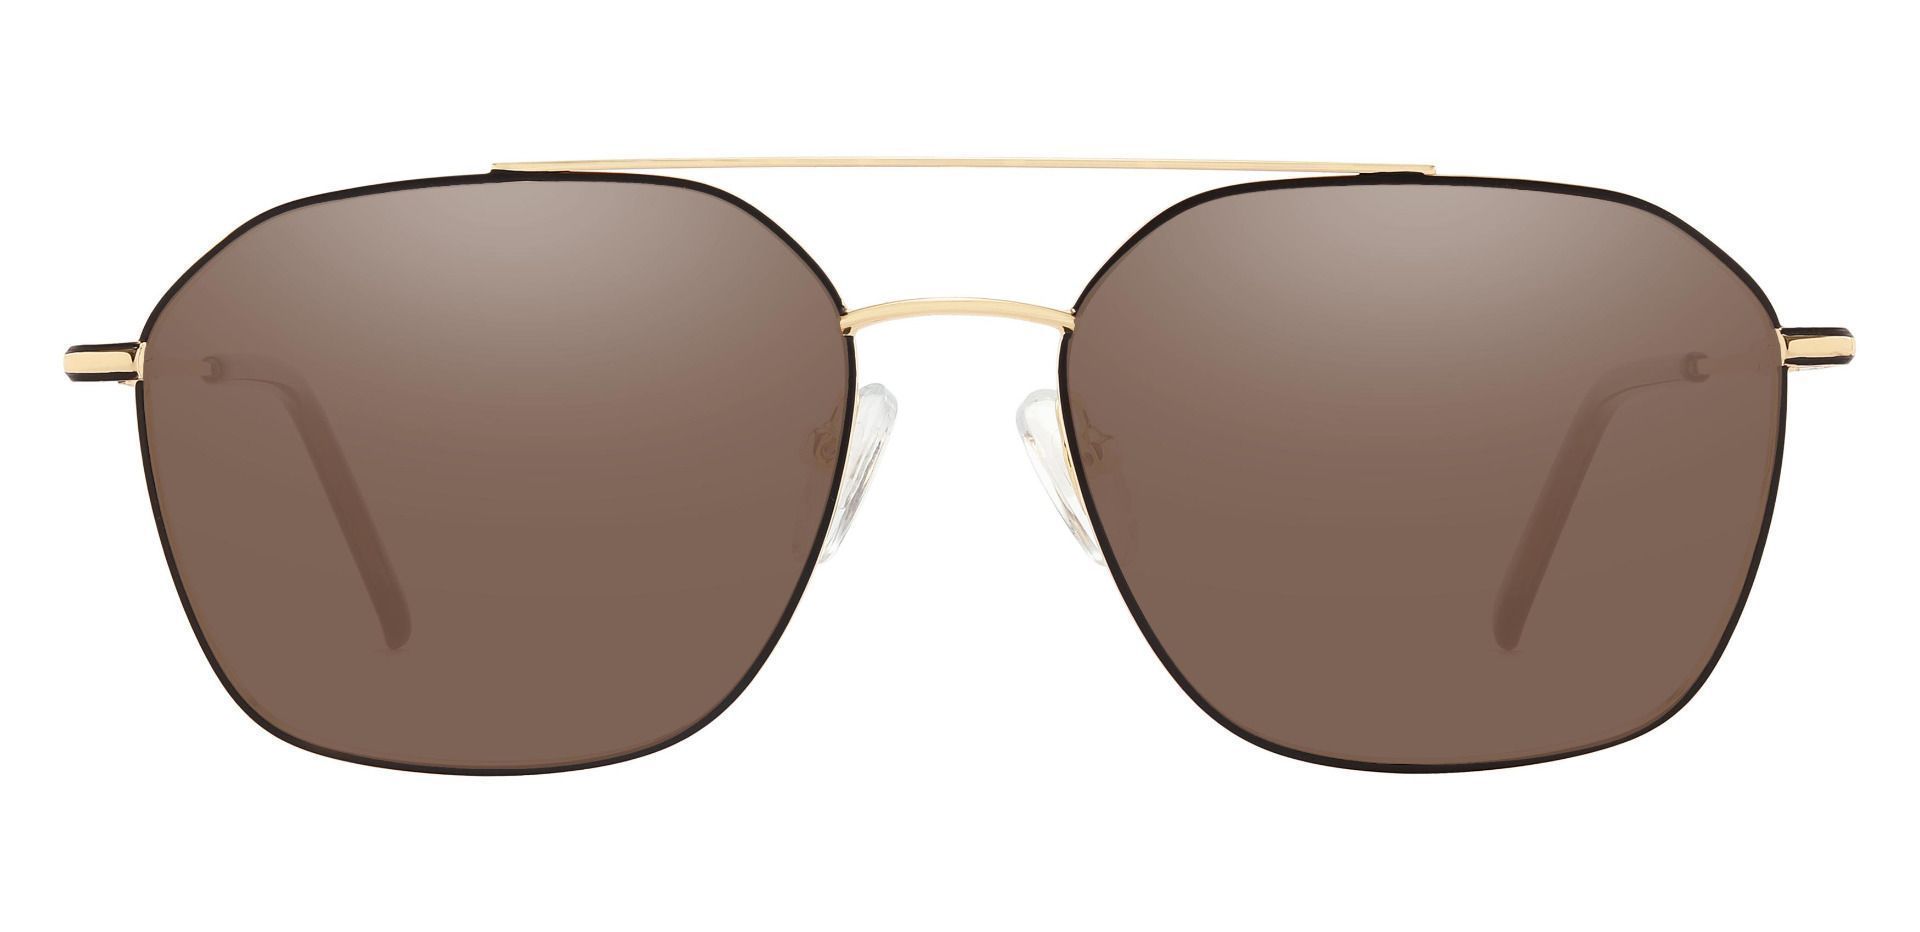 Harvey Aviator Prescription Sunglasses - Gold Frame With Brown Lenses